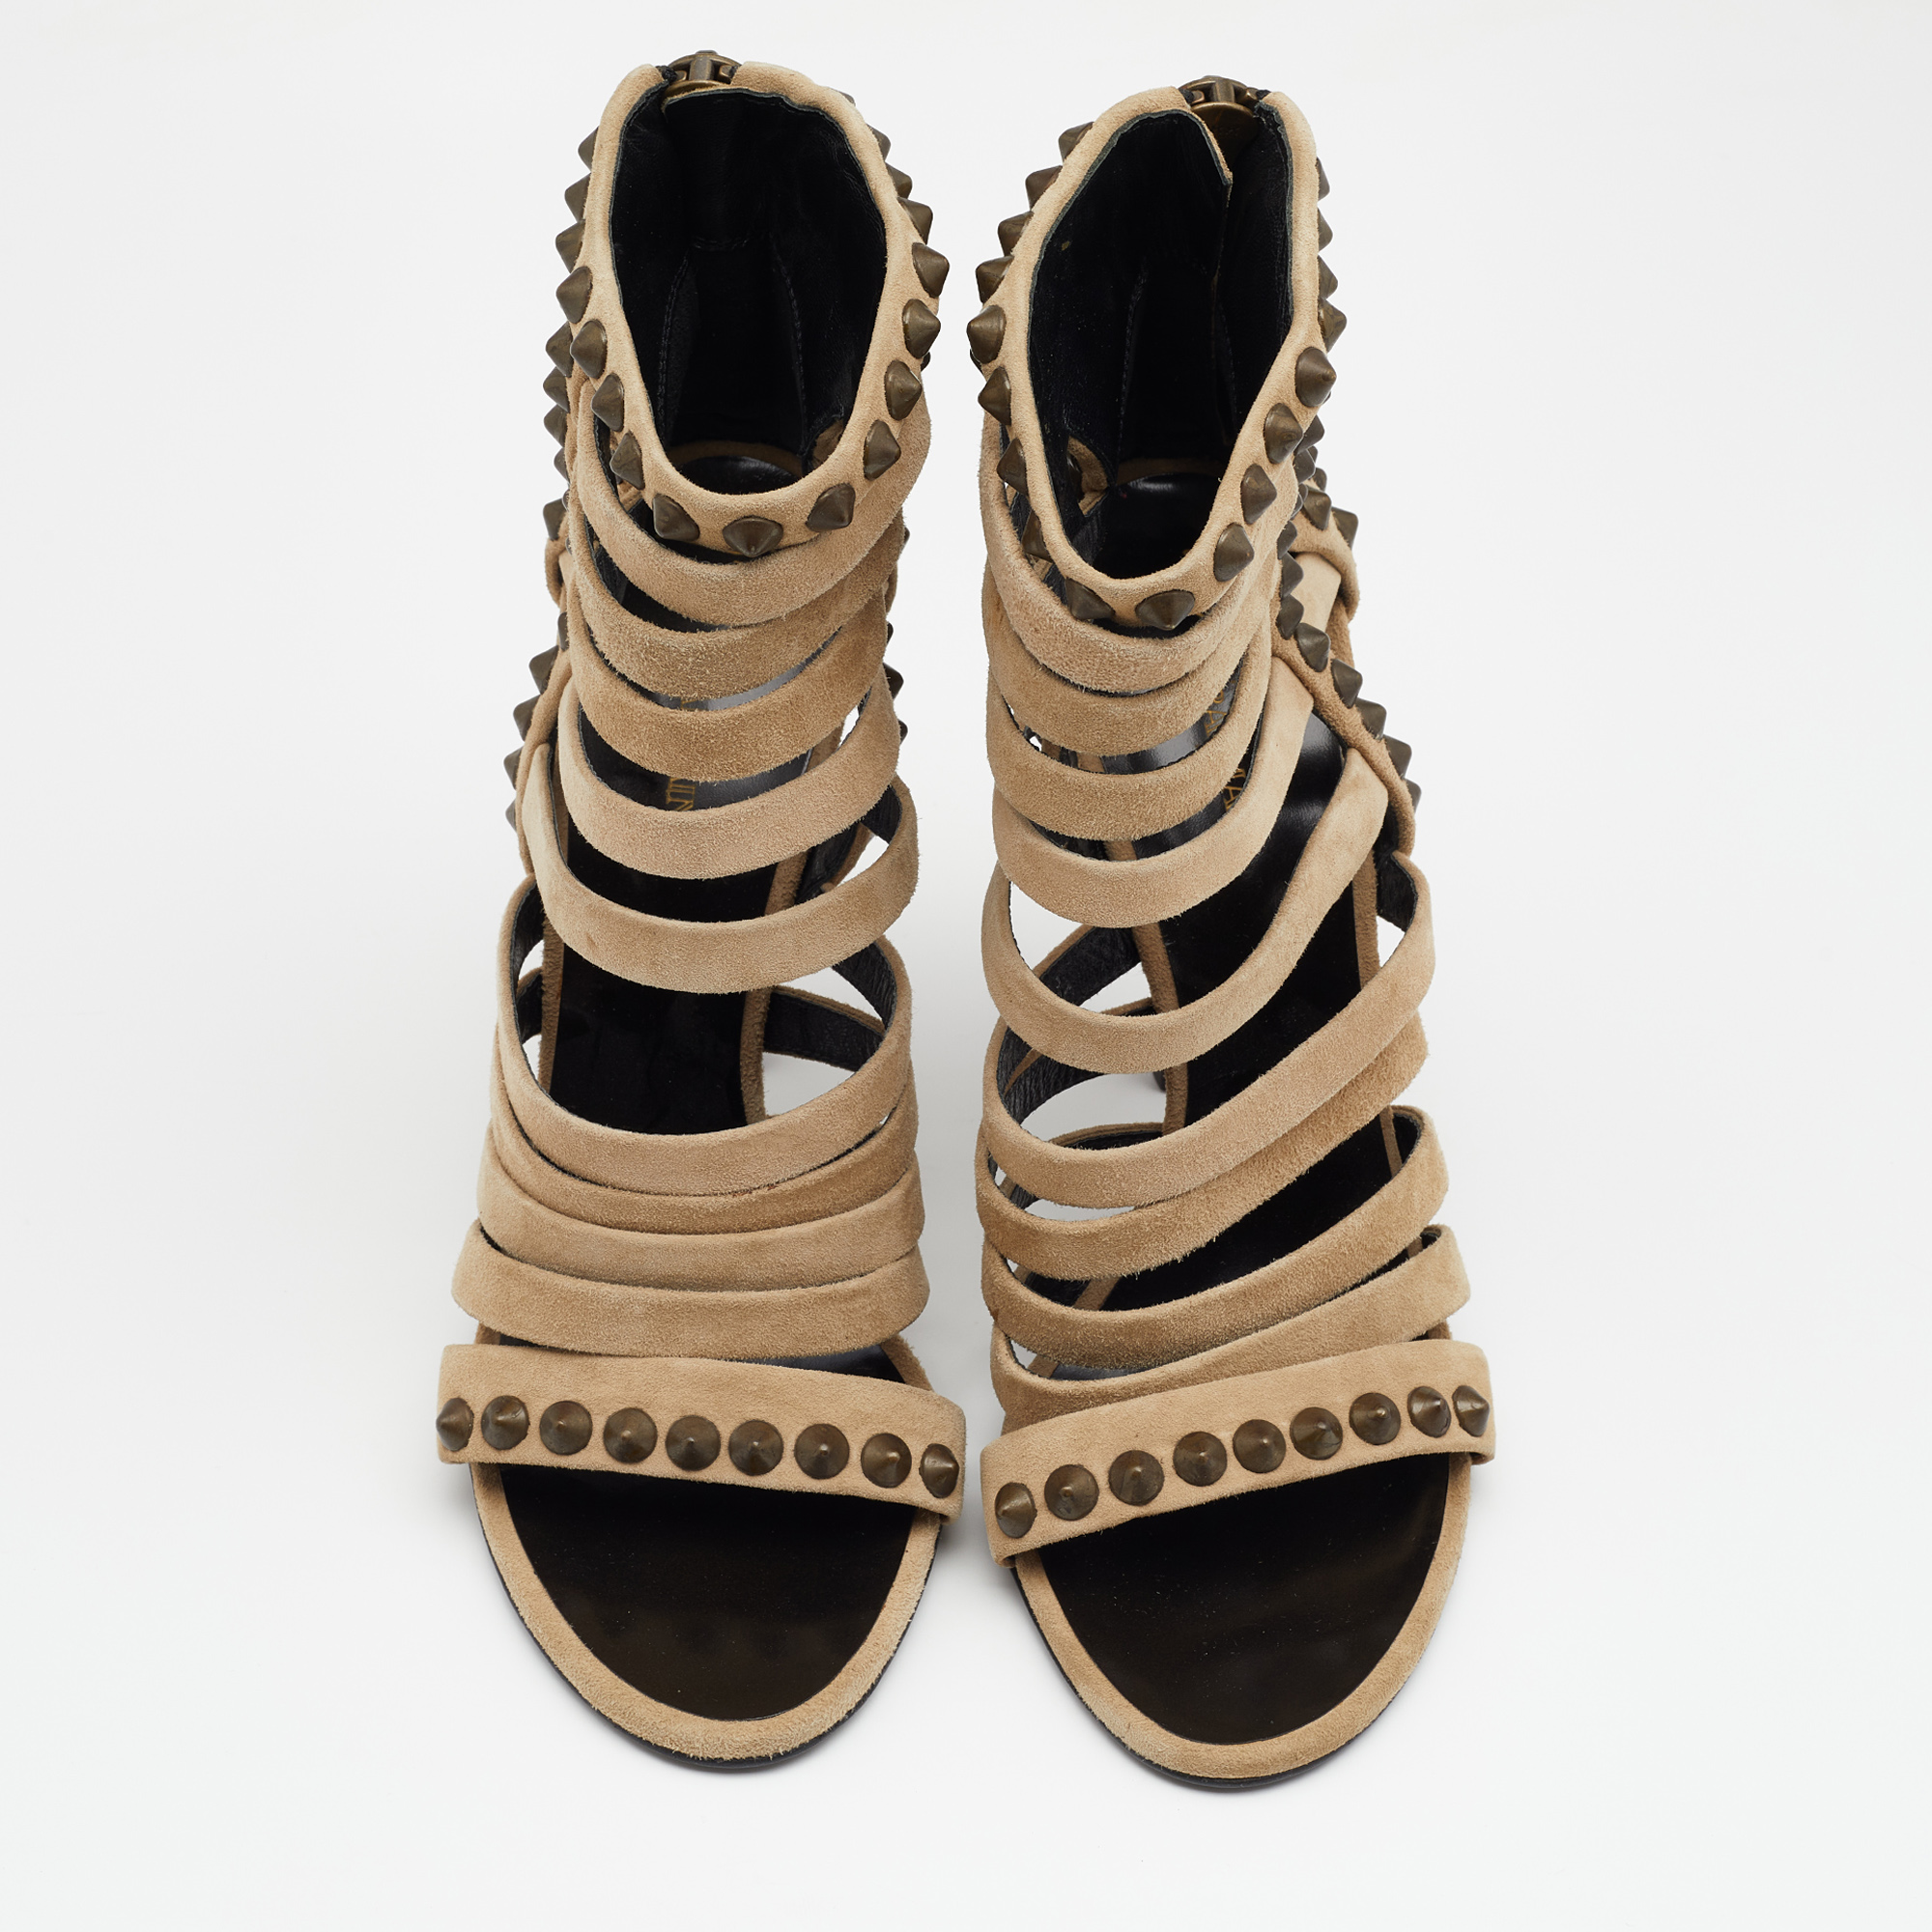 Giuseppe Zanotti For Pierre Balmain Beige Suede Studded Strappy Sandals Size 40